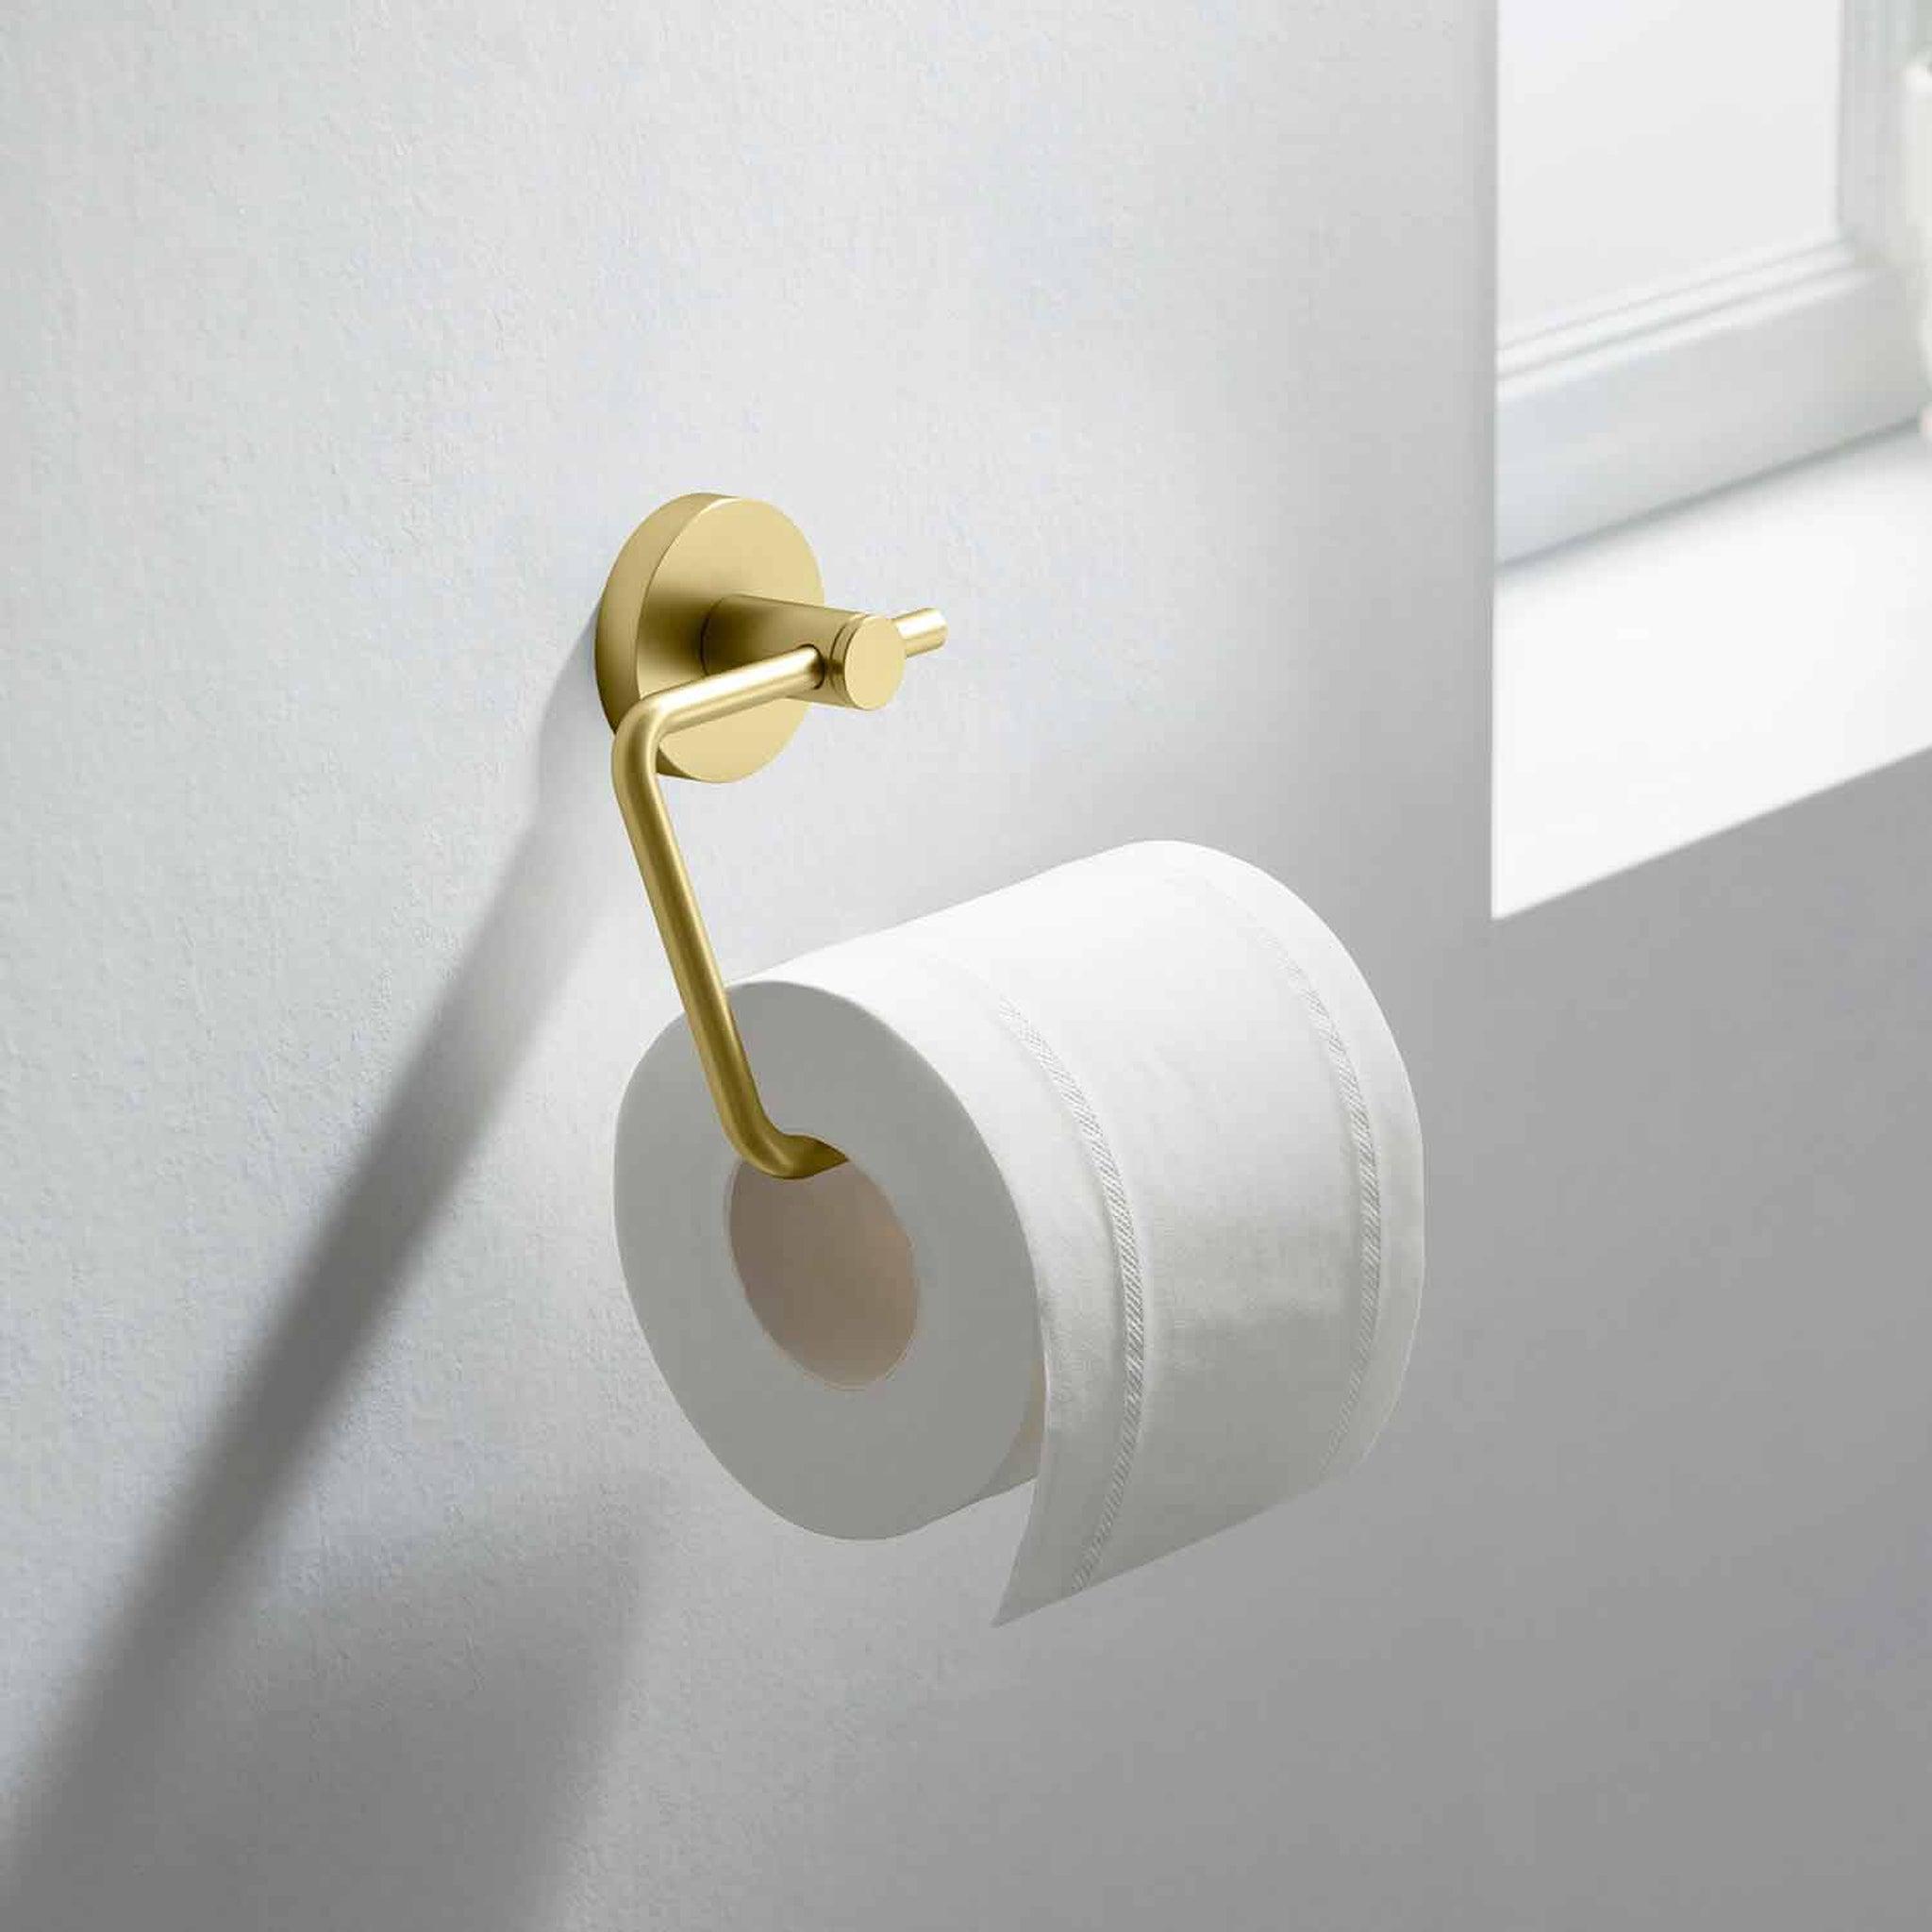 KIBI, KIBI Circular Brass Bathroom Toilet Paper Holder in Brushed Gold Finish